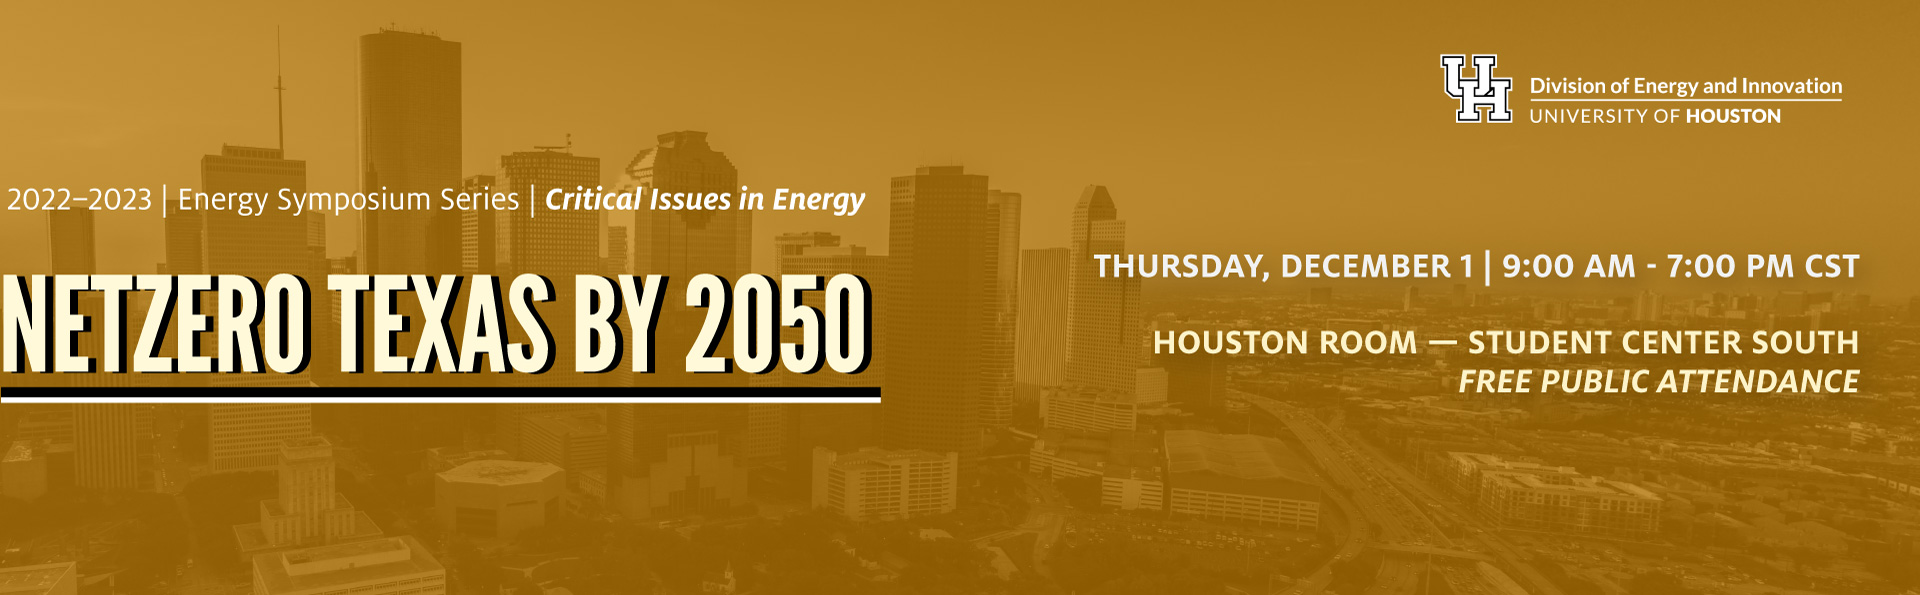 UH Energy Symposium - Netzero Texas by 2050